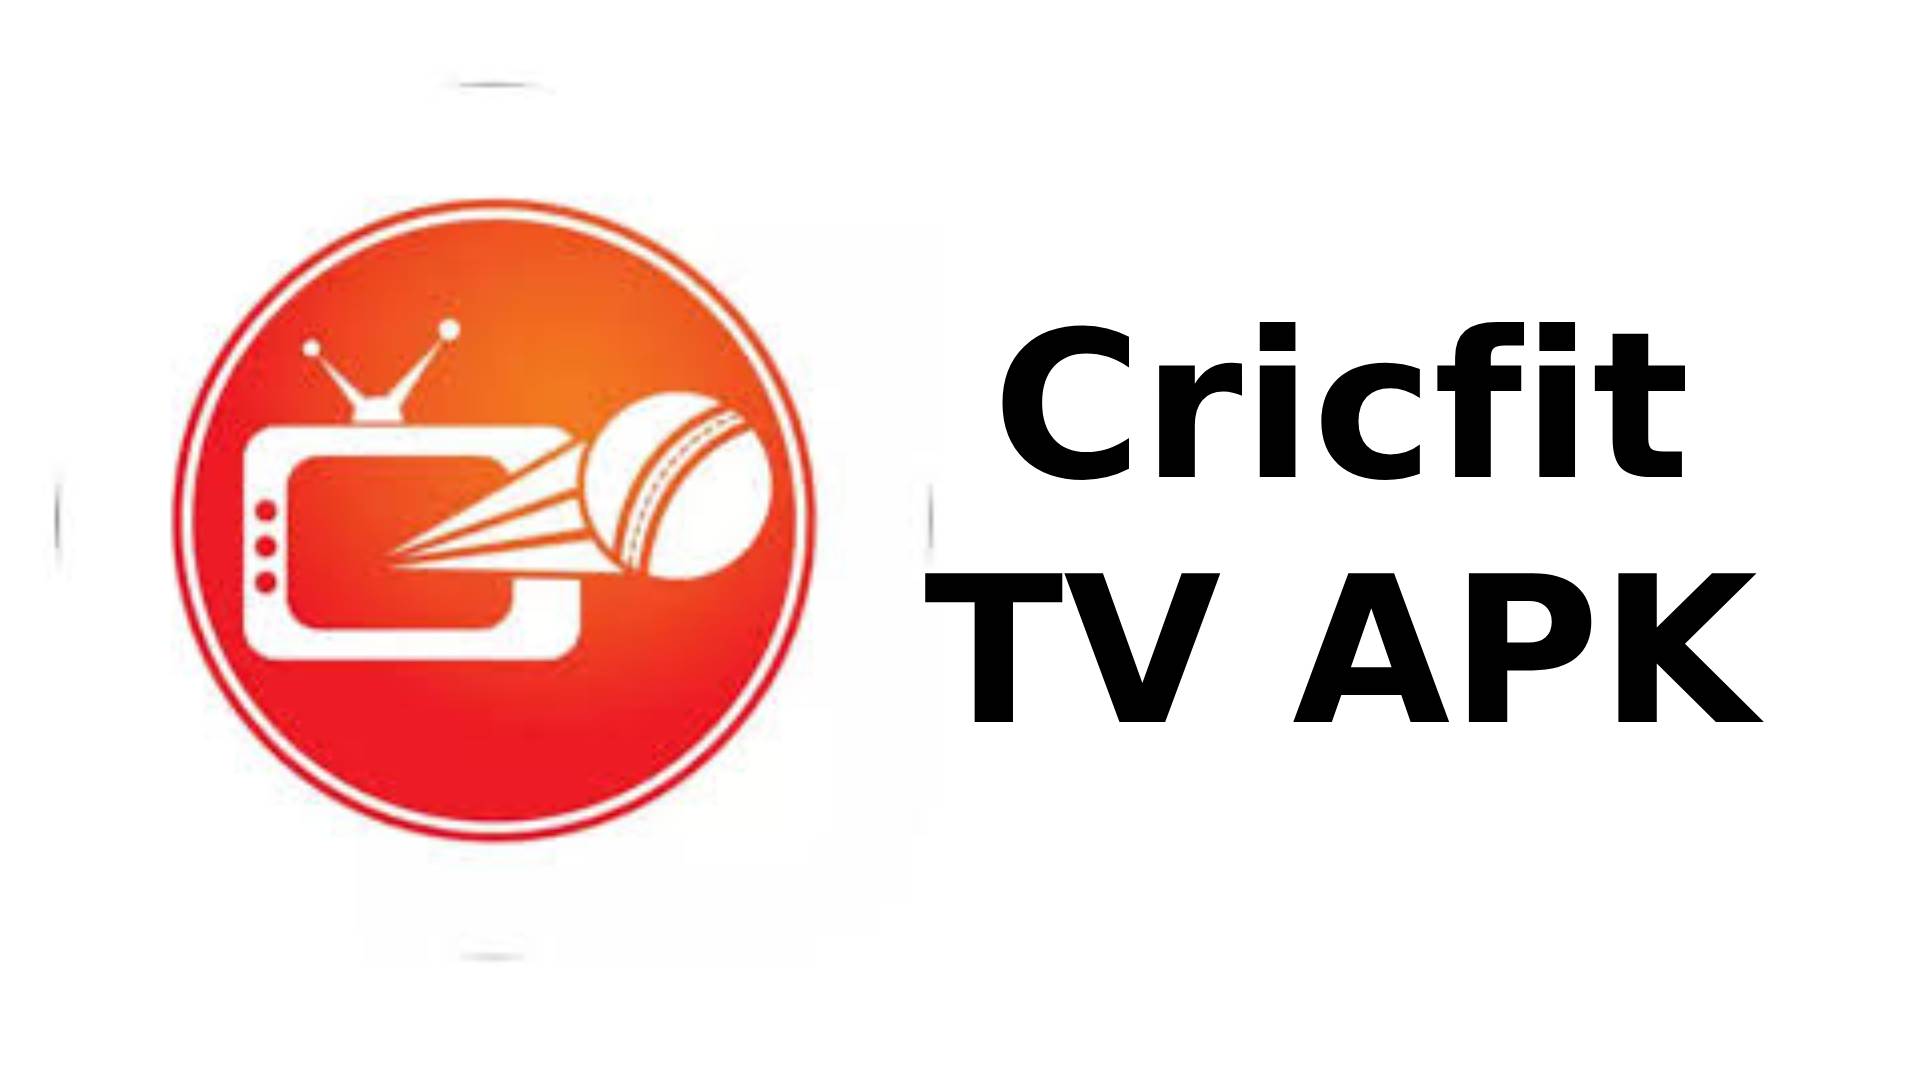 Cricfit TV APK